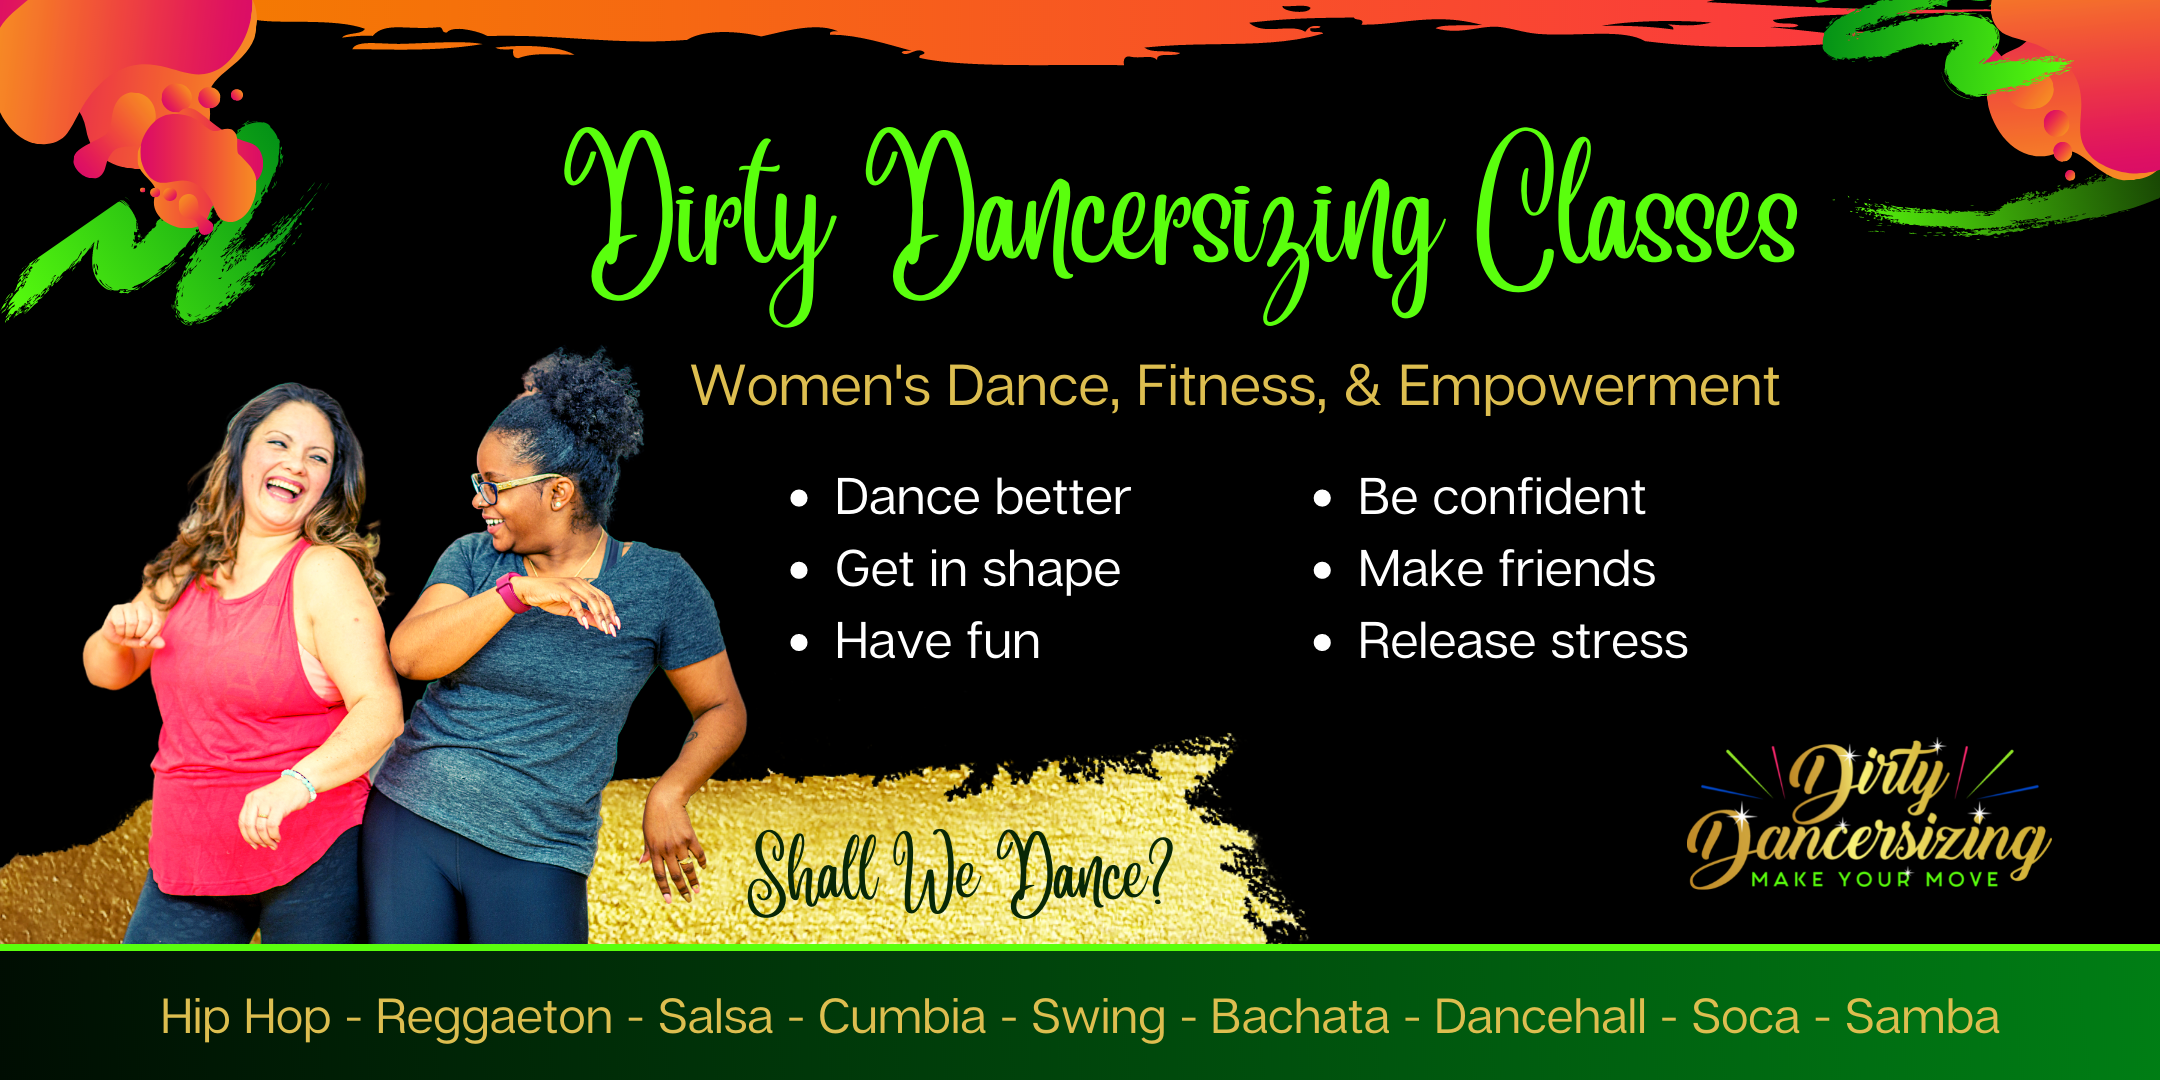 Dirty Dancersizing Group Class, Miami-Dade, Florida, United States